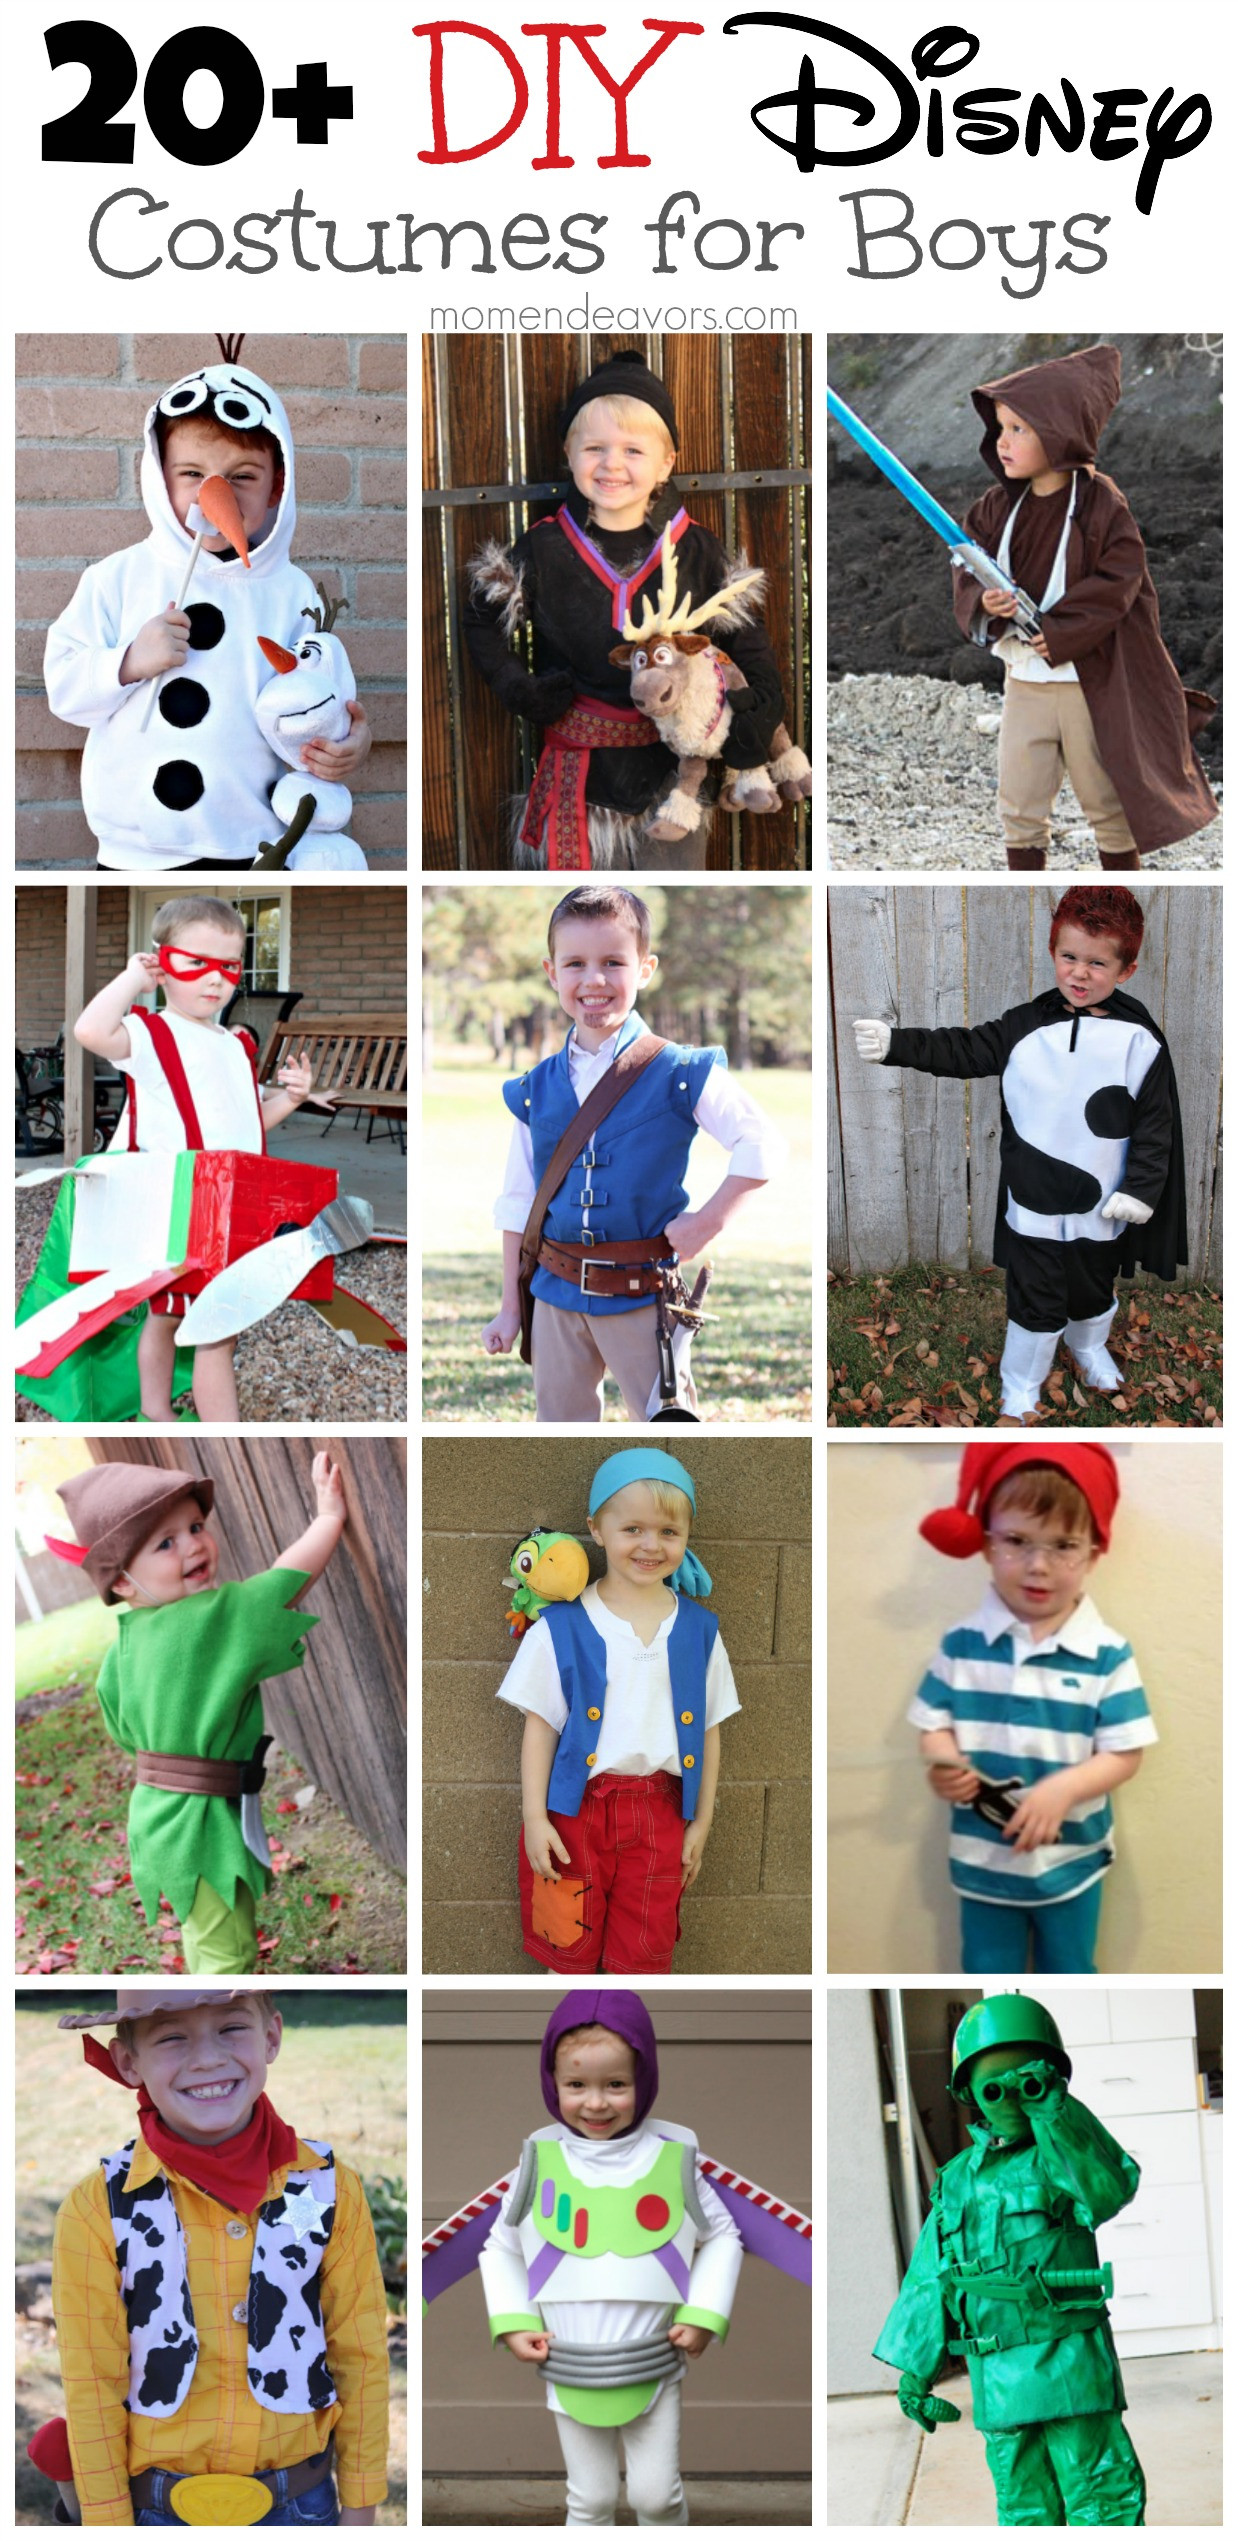 DIY Character Costumes
 DIY Disney Costumes for Boys